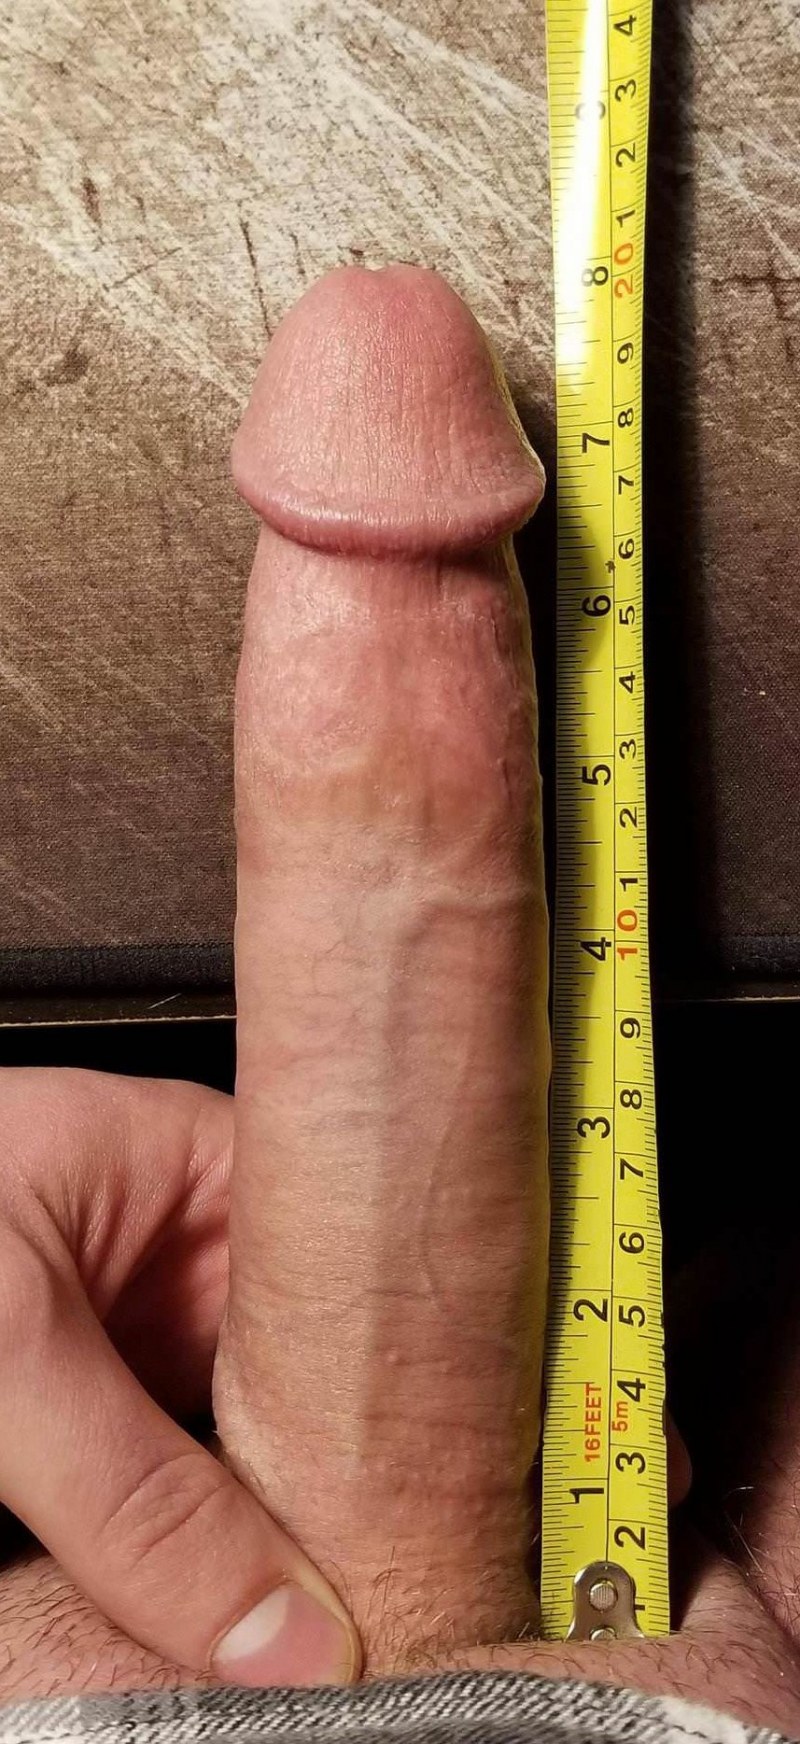 7 inch dick erect